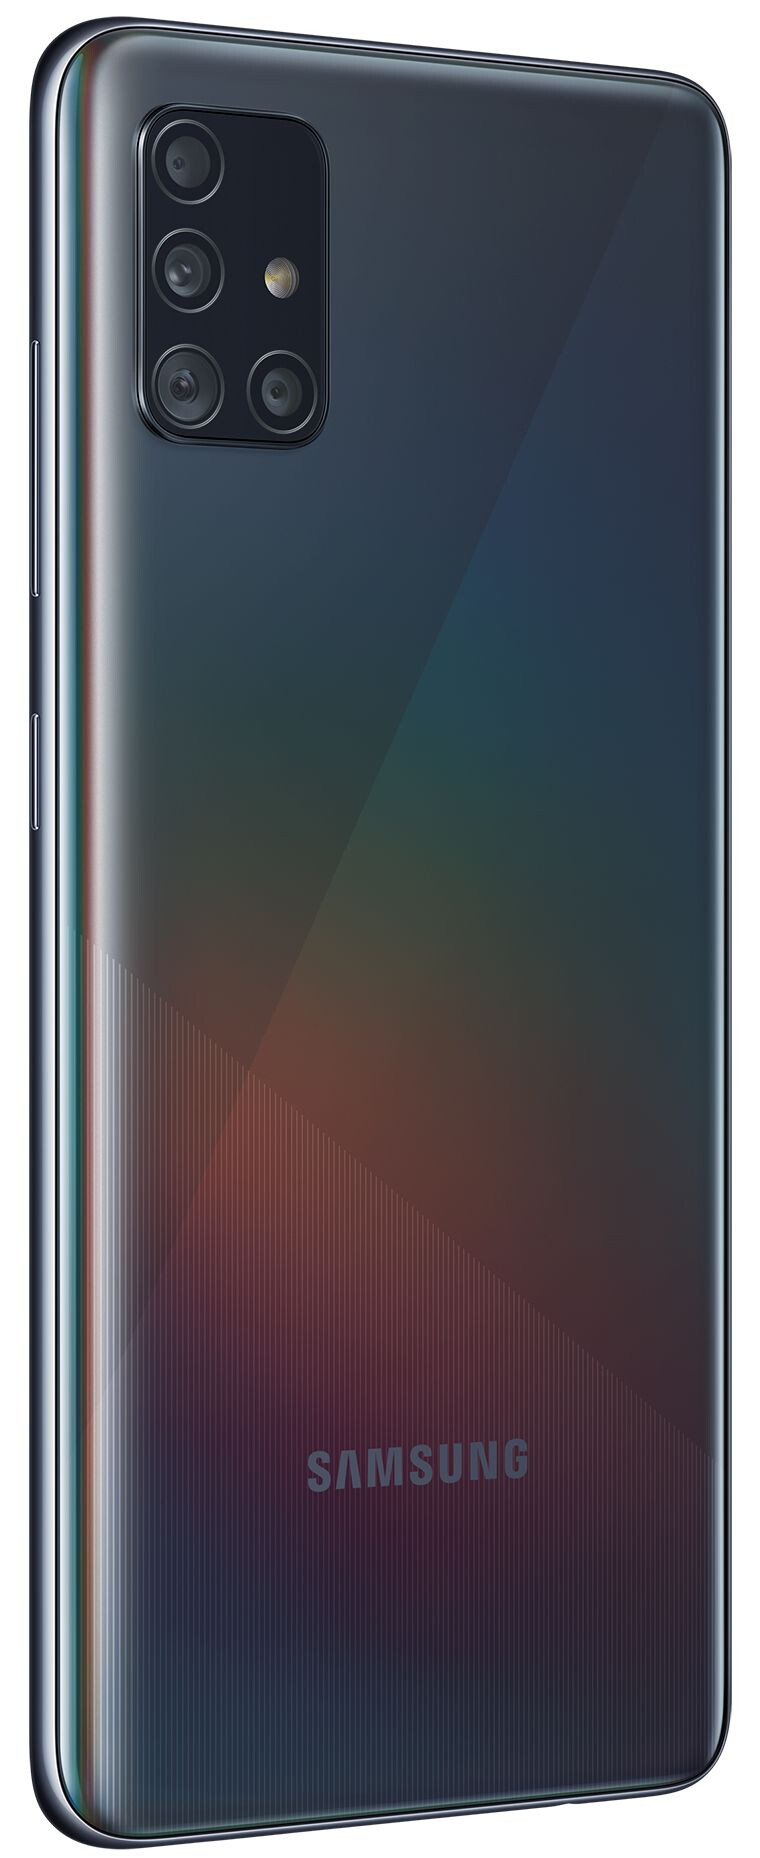 Смартфон Samsung Galaxy A51 6/128GB (ЕАС) Prism Crush Black (Черный)